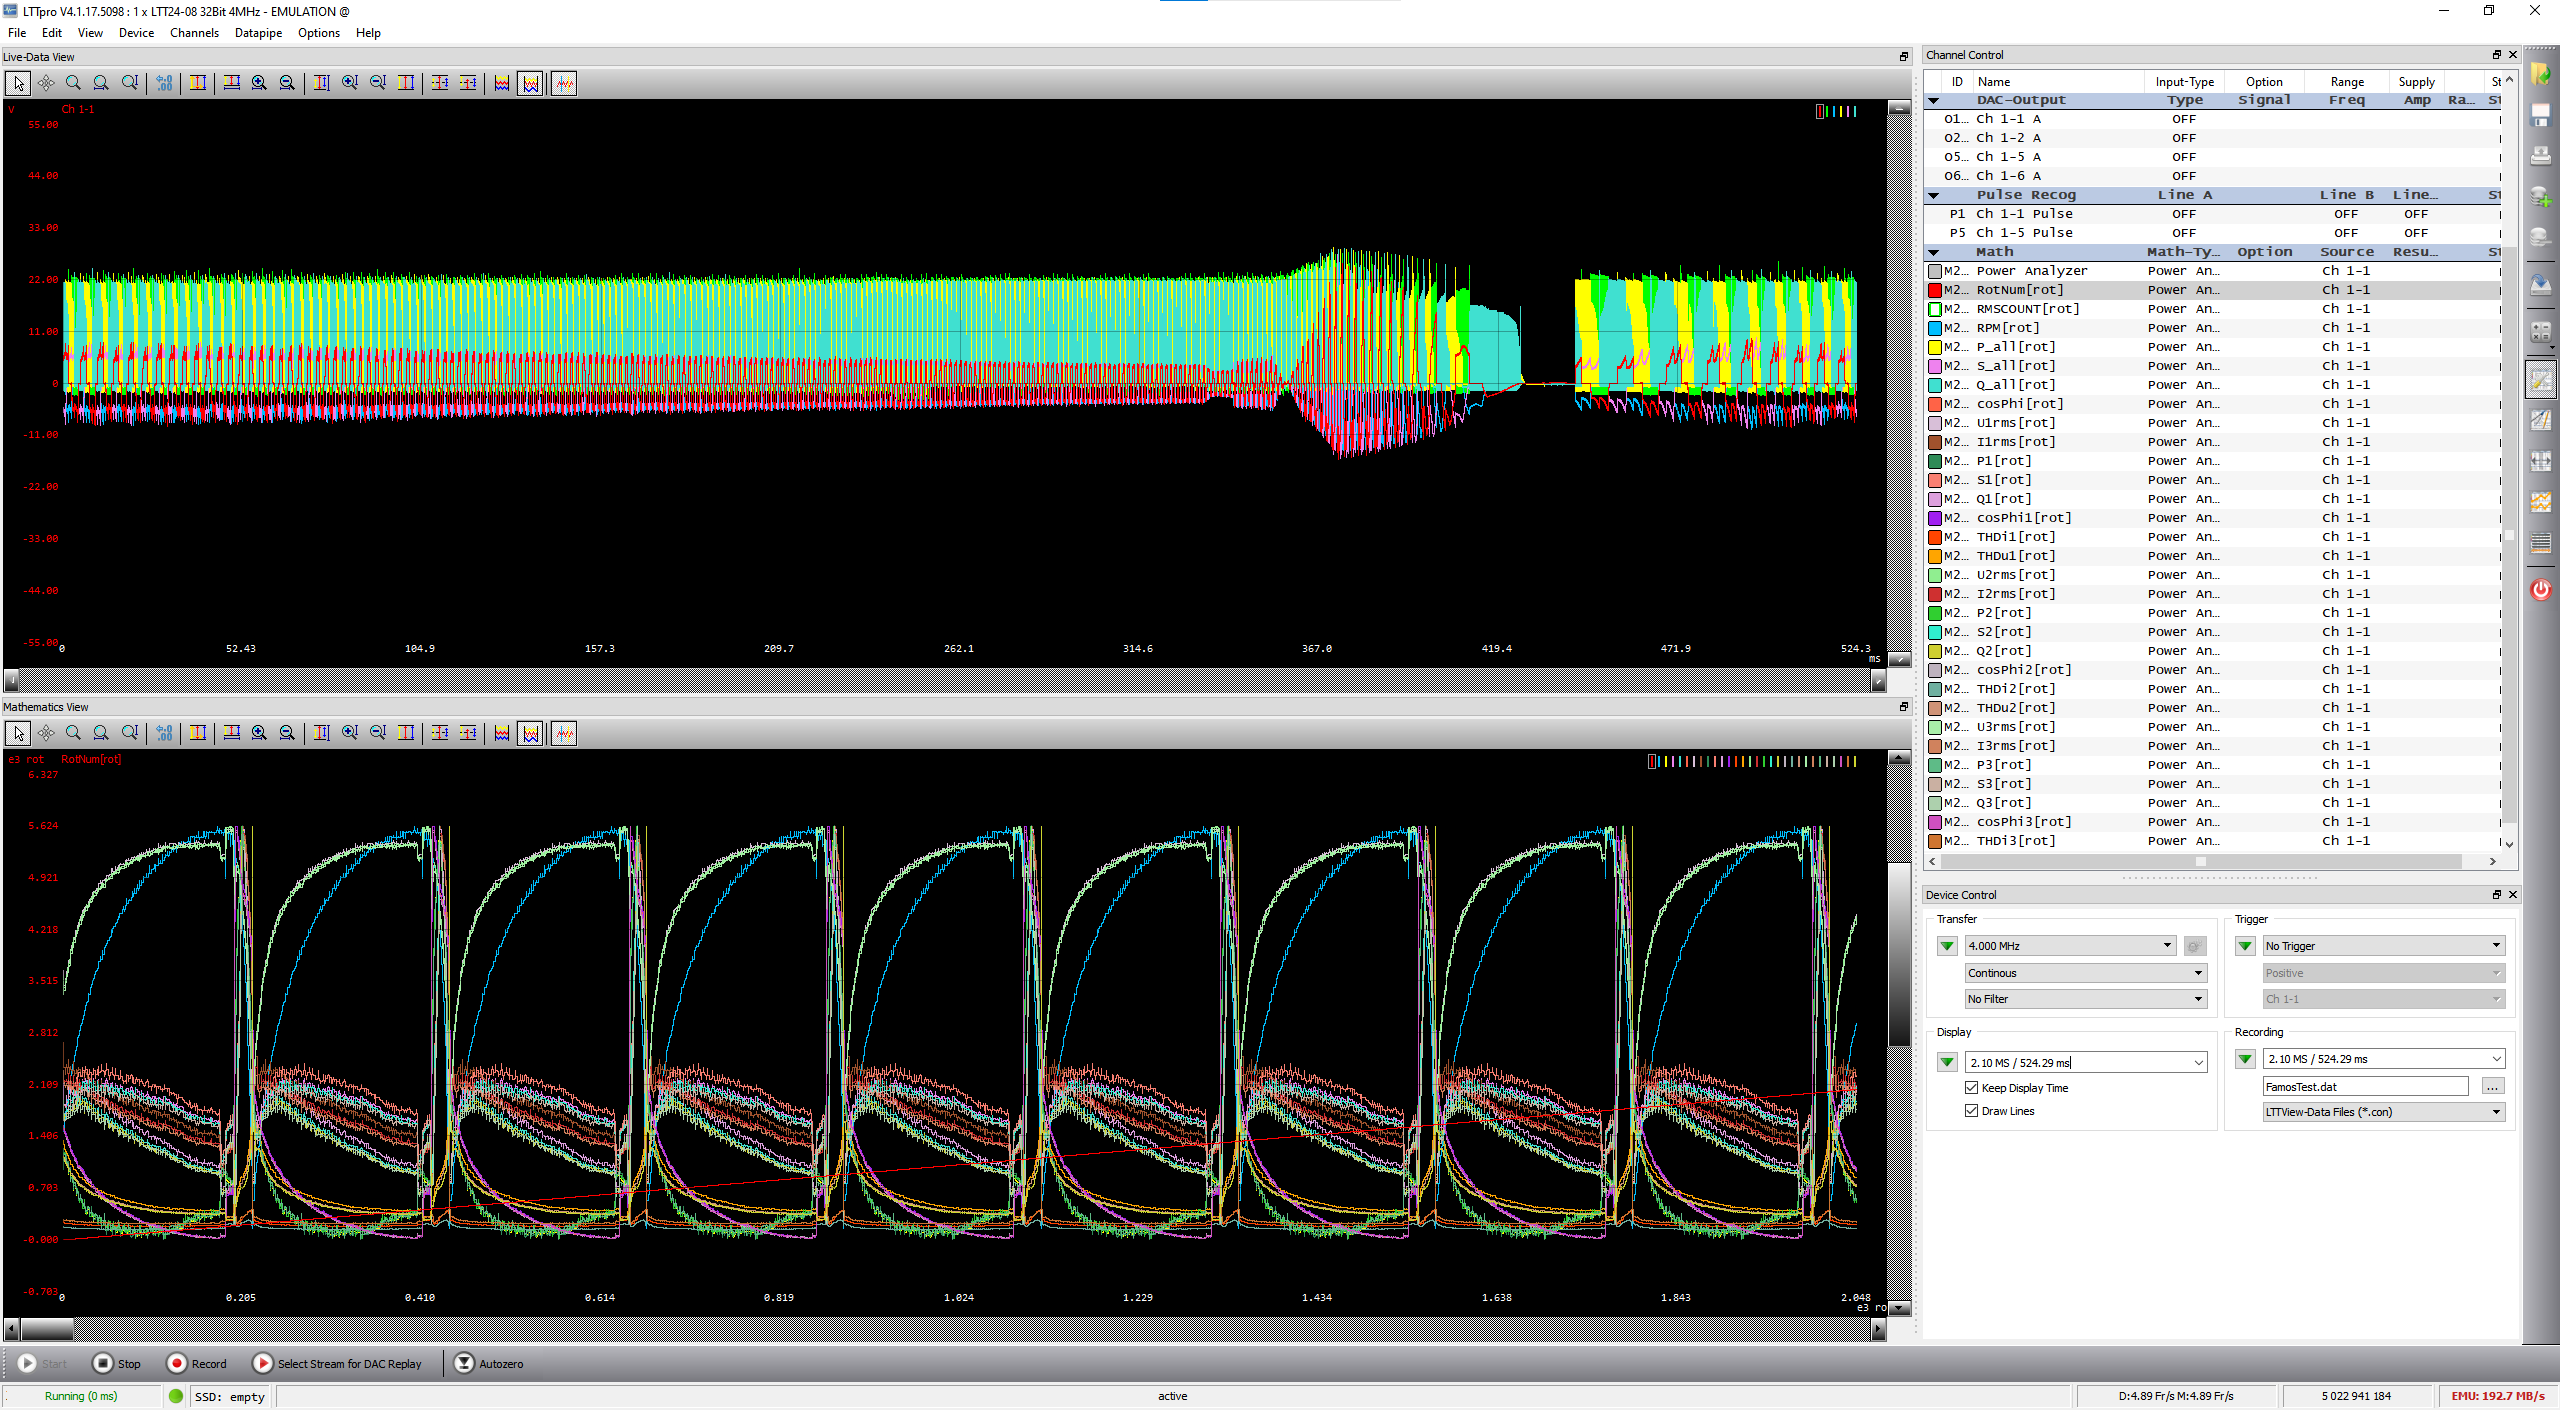 LTTpro measurement software screenshot power measurement